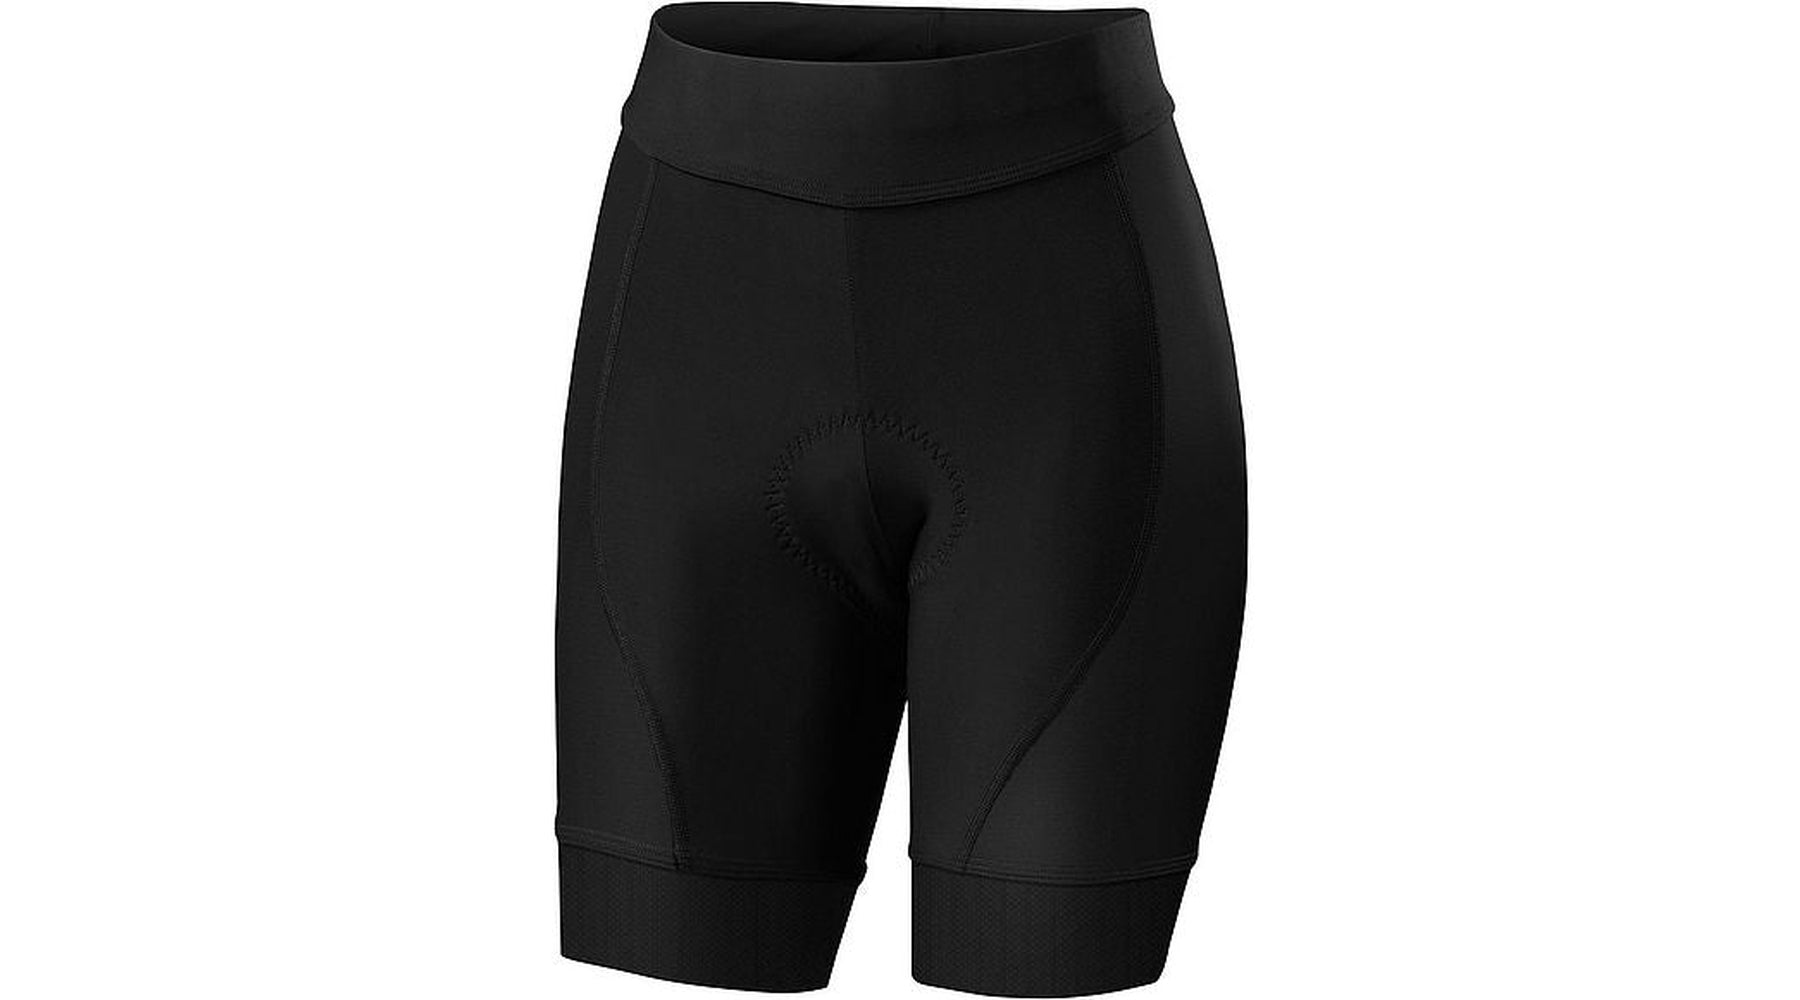 Women's SL Pro Shorts-Specialized